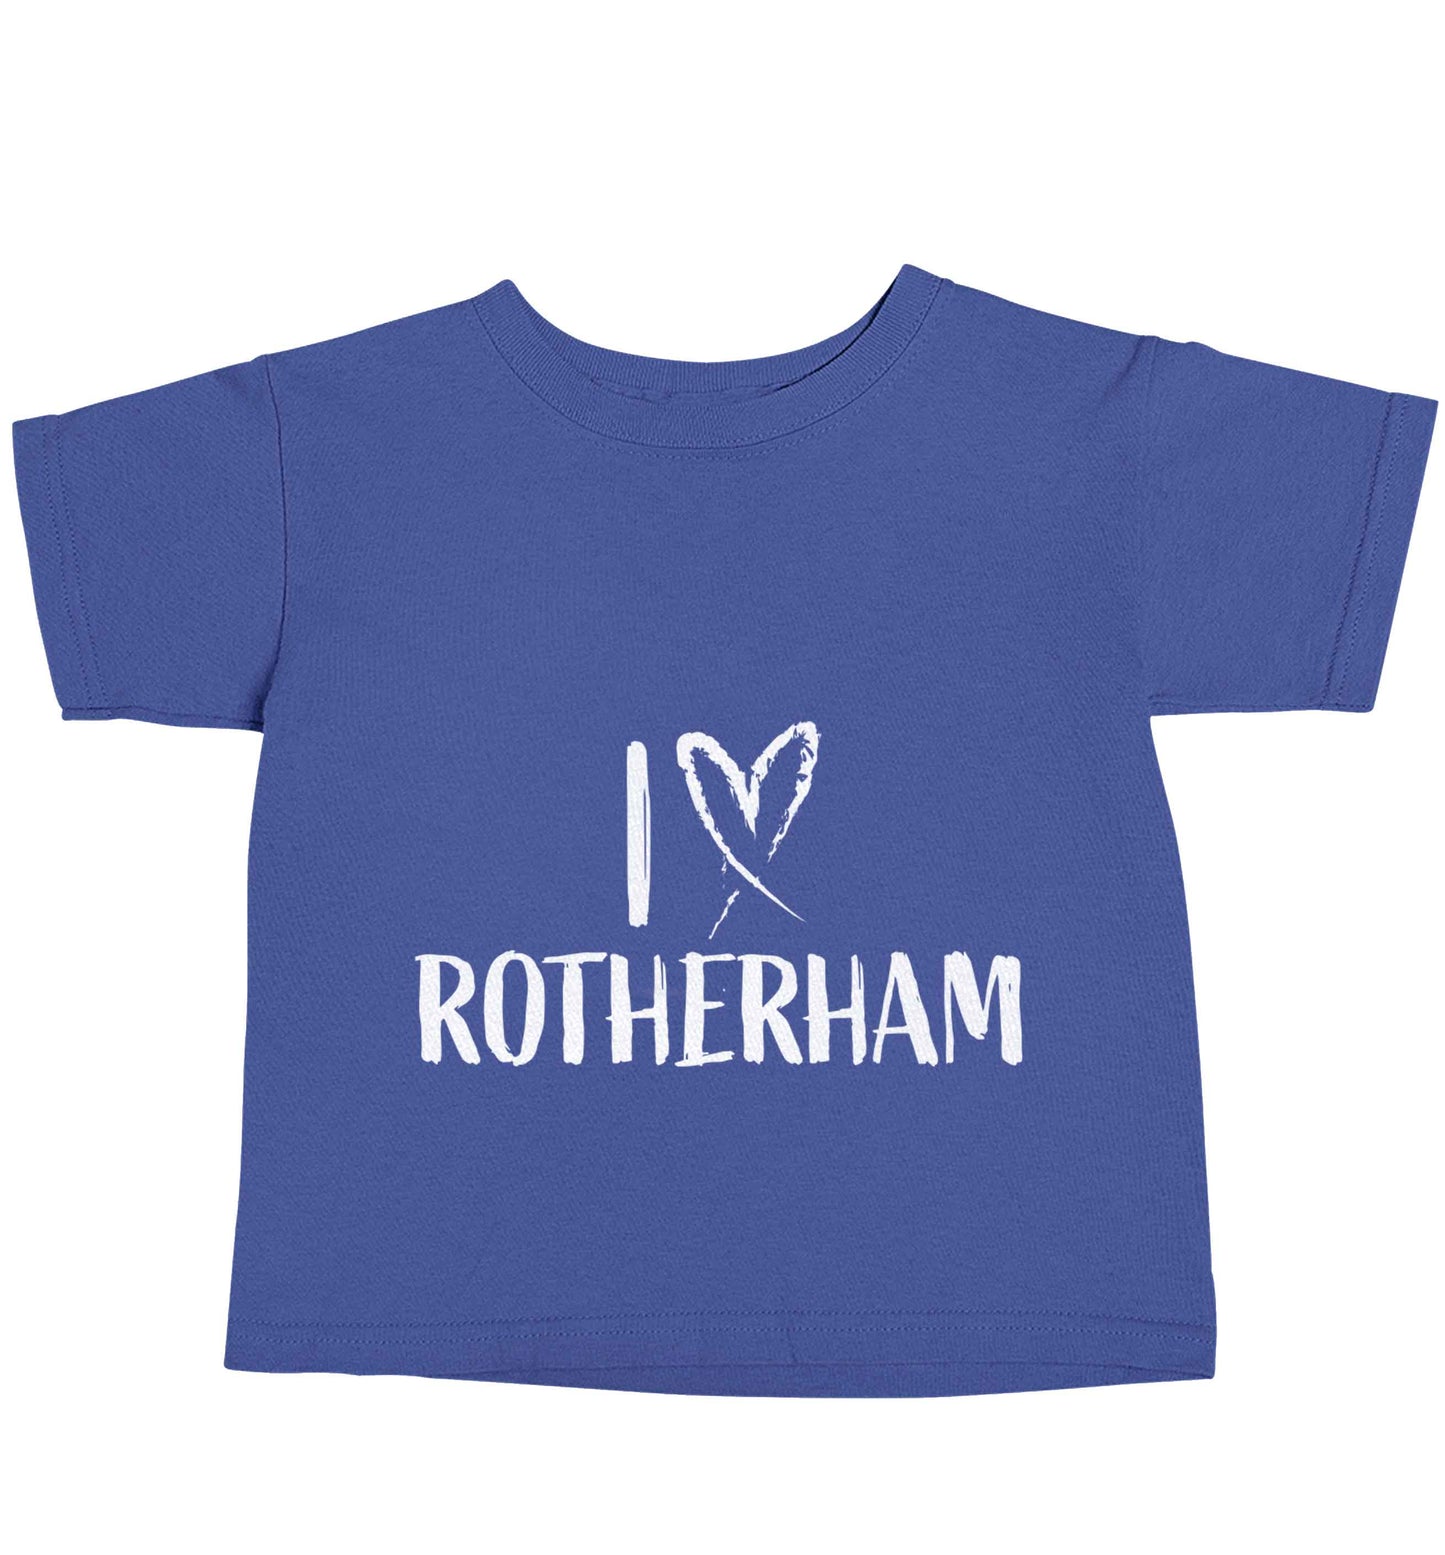 I love Rotherham blue baby toddler Tshirt 2 Years